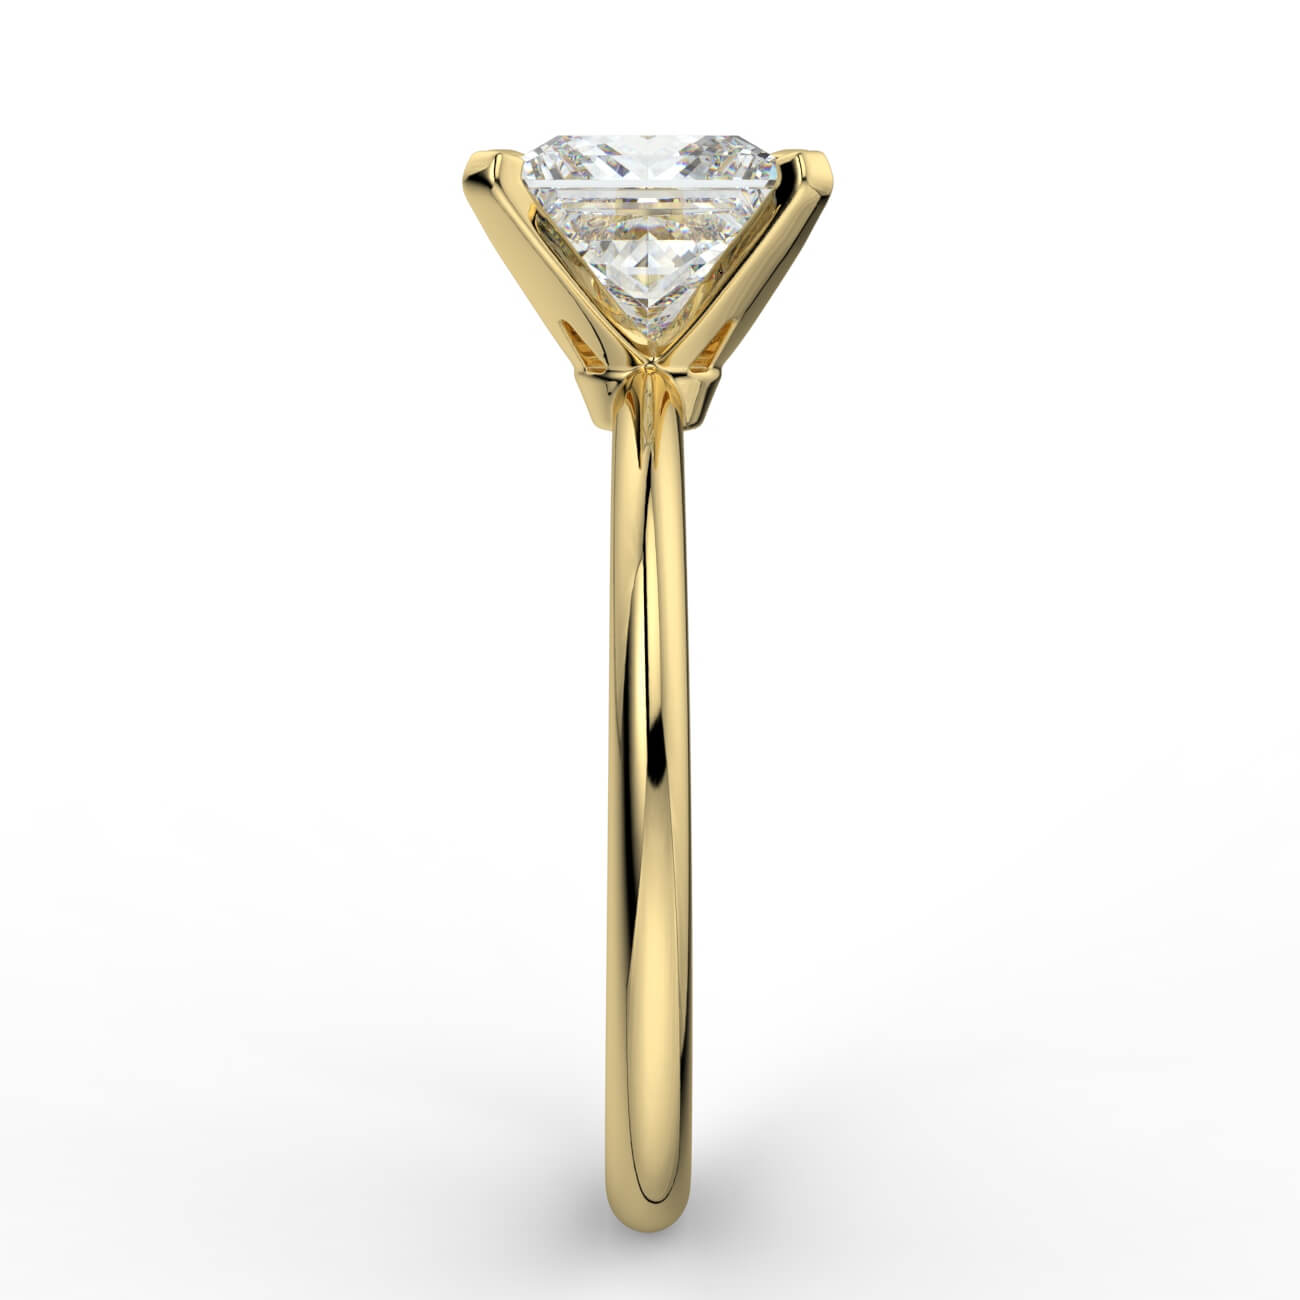 Knife-edge solitaire princess cut diamond engagement ring in yellow gold – Australian Diamond Network